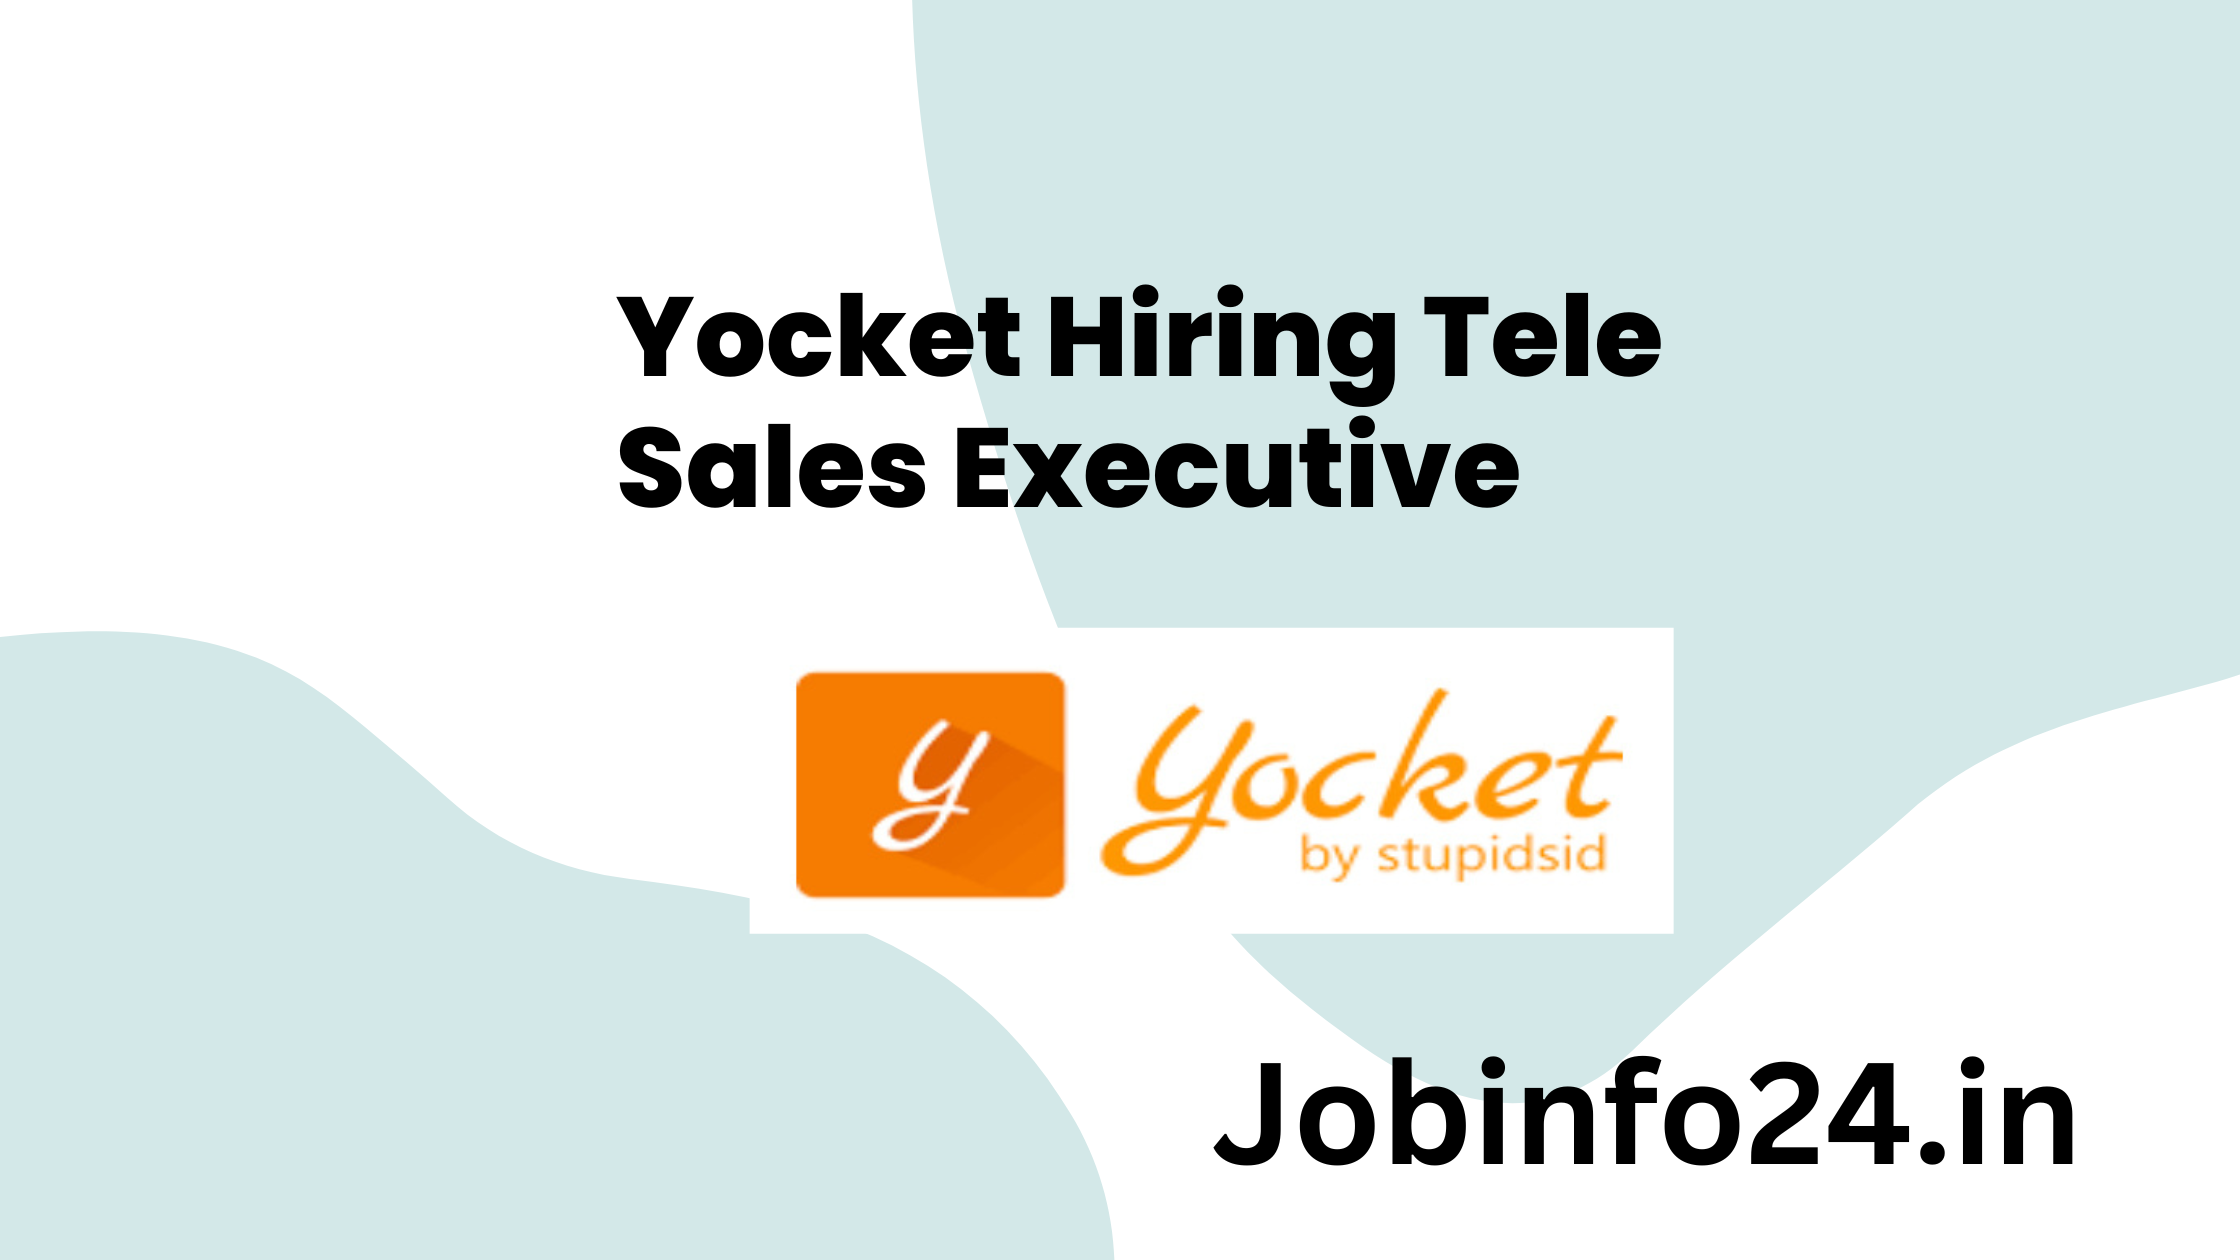 Yocket Hiring Tele Sales Executive